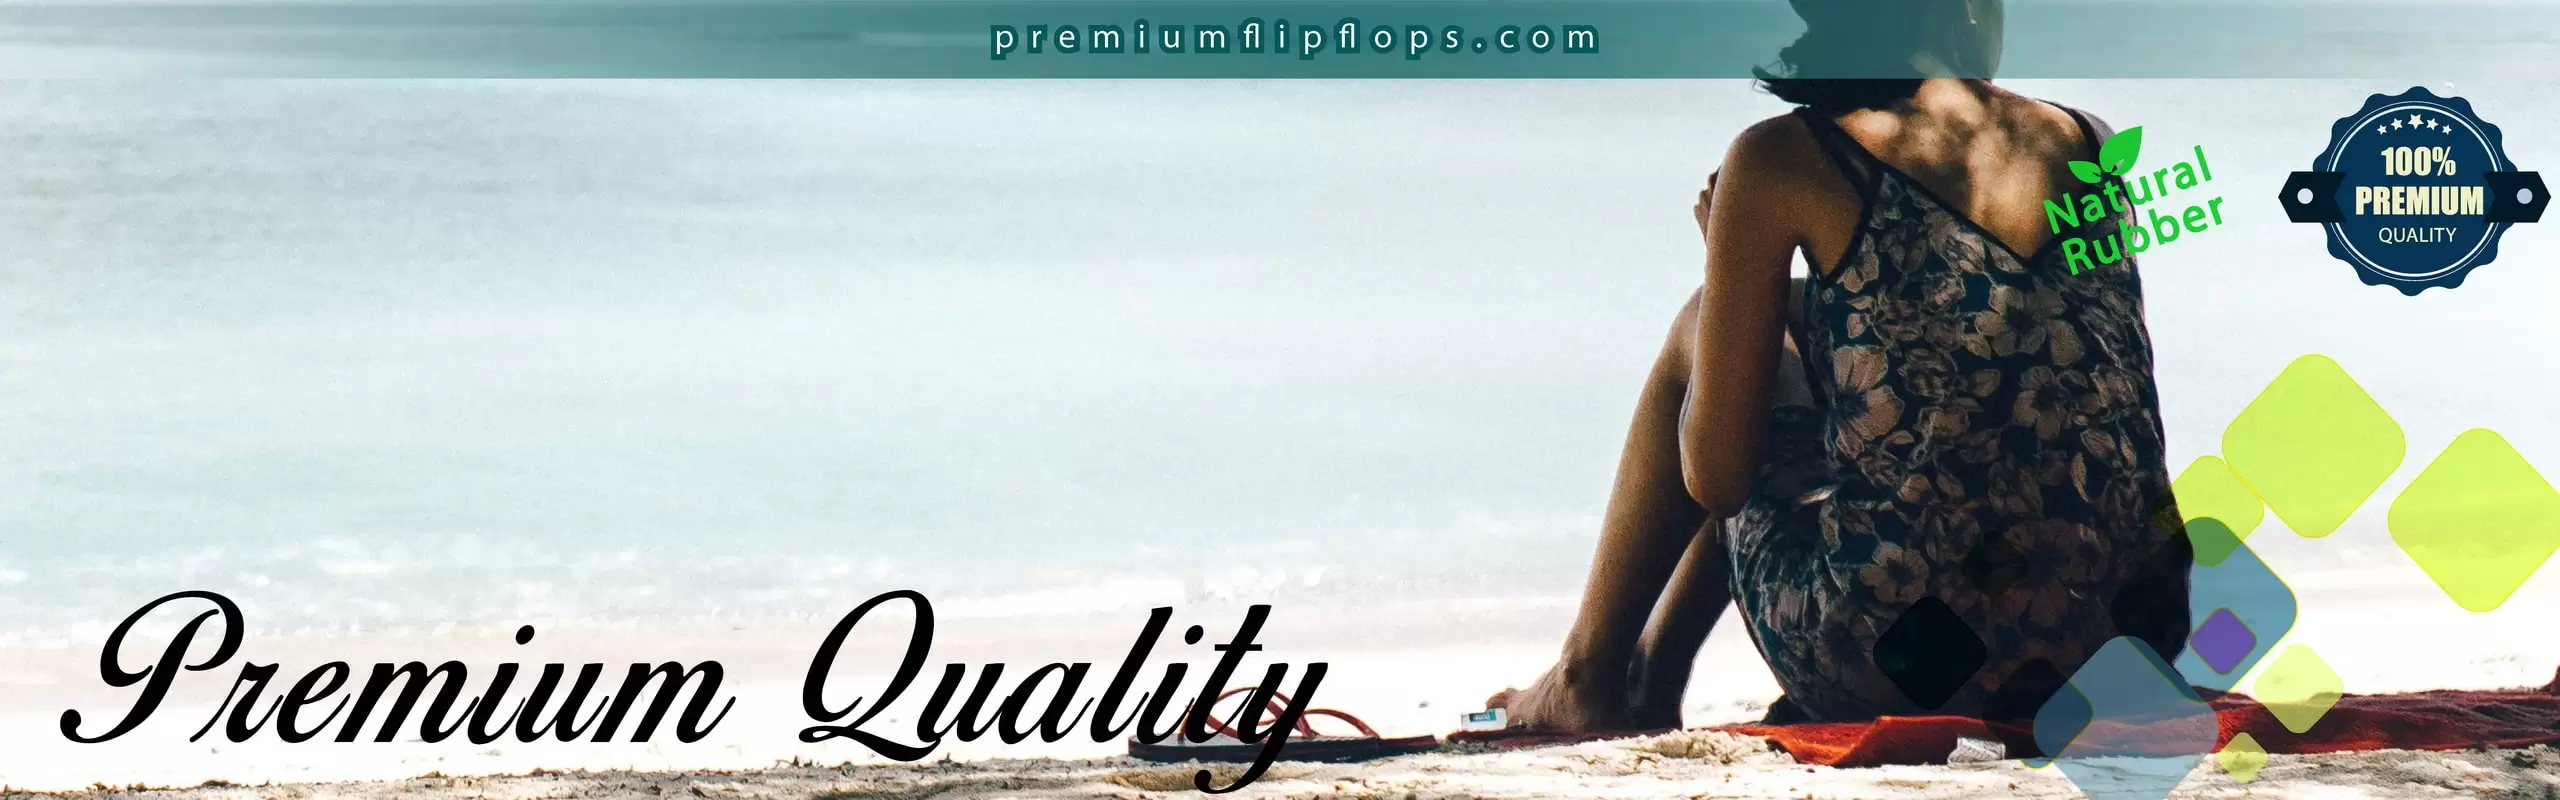 Premium Quality Banner Jpg